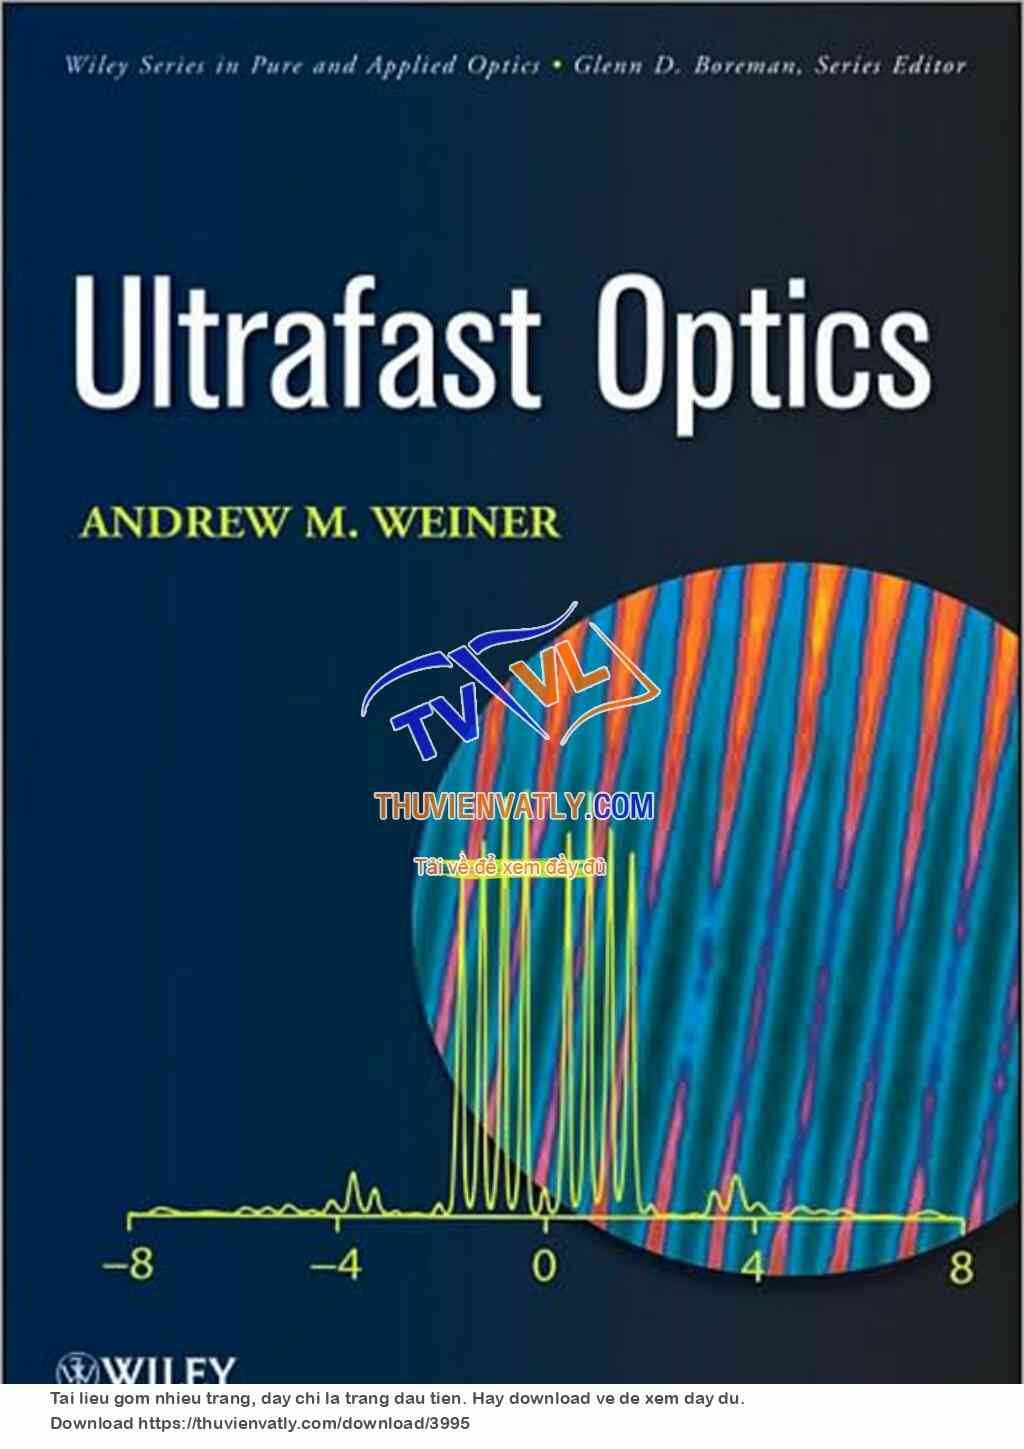 Ultrafast Optics (Andrew M. Weiner)